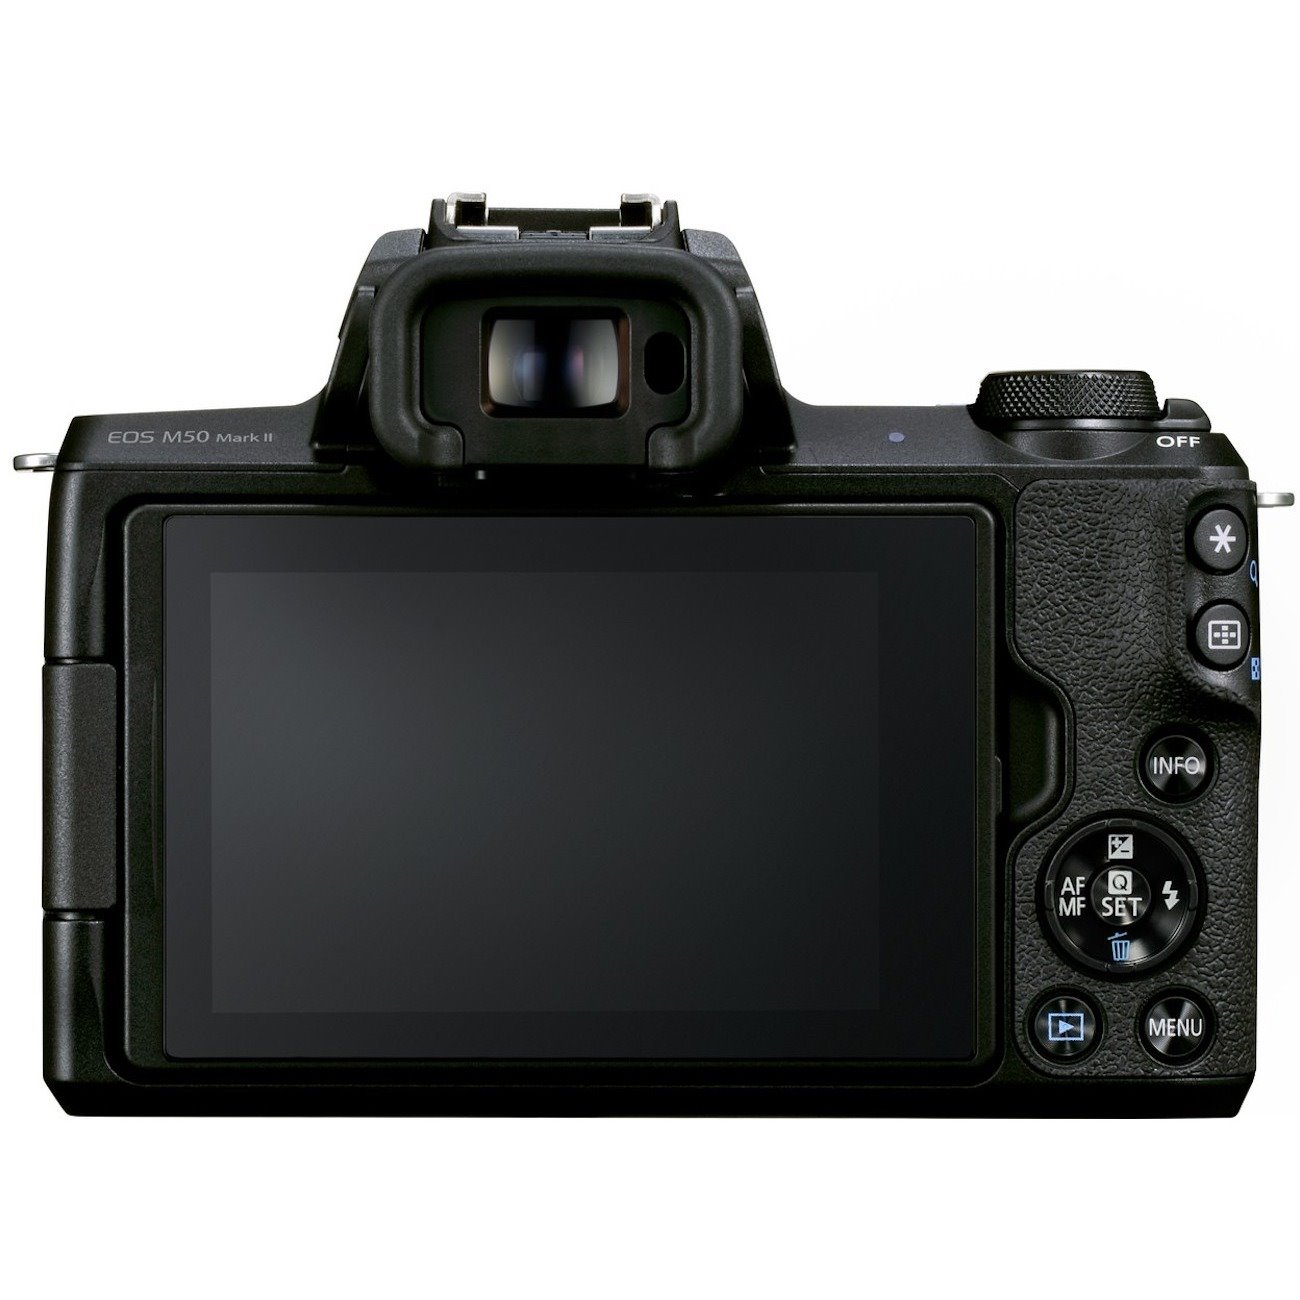 Canon EOS M50 Mark II 24.1 Megapixel Digital SLR Camera Body Only - Black